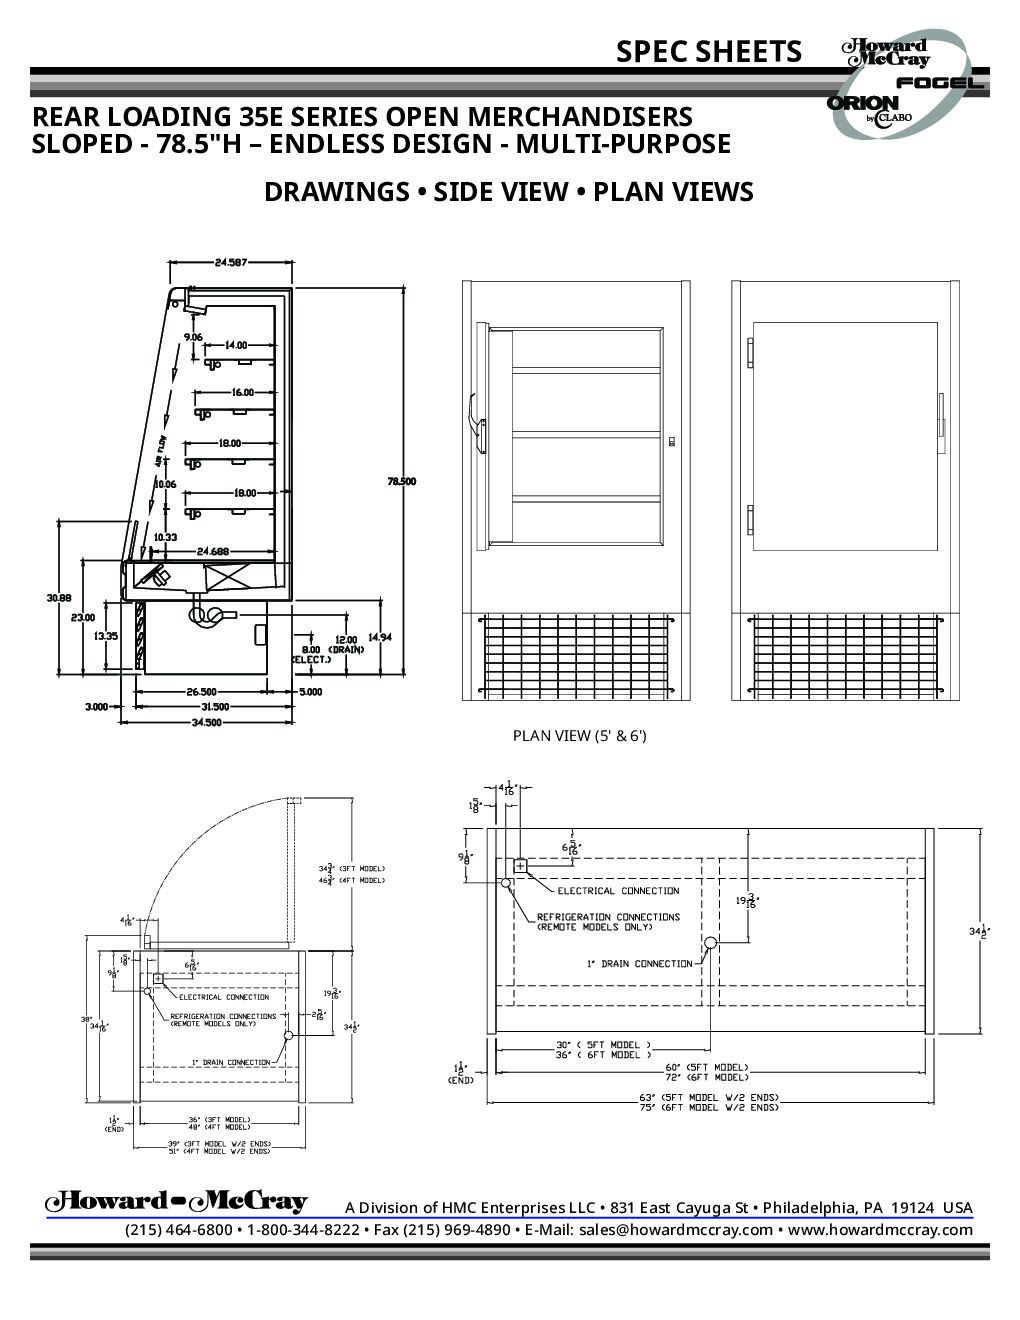 Howard-McCray R-OD35E-6S-S-SL Open Refrigerated Display Merchandiser